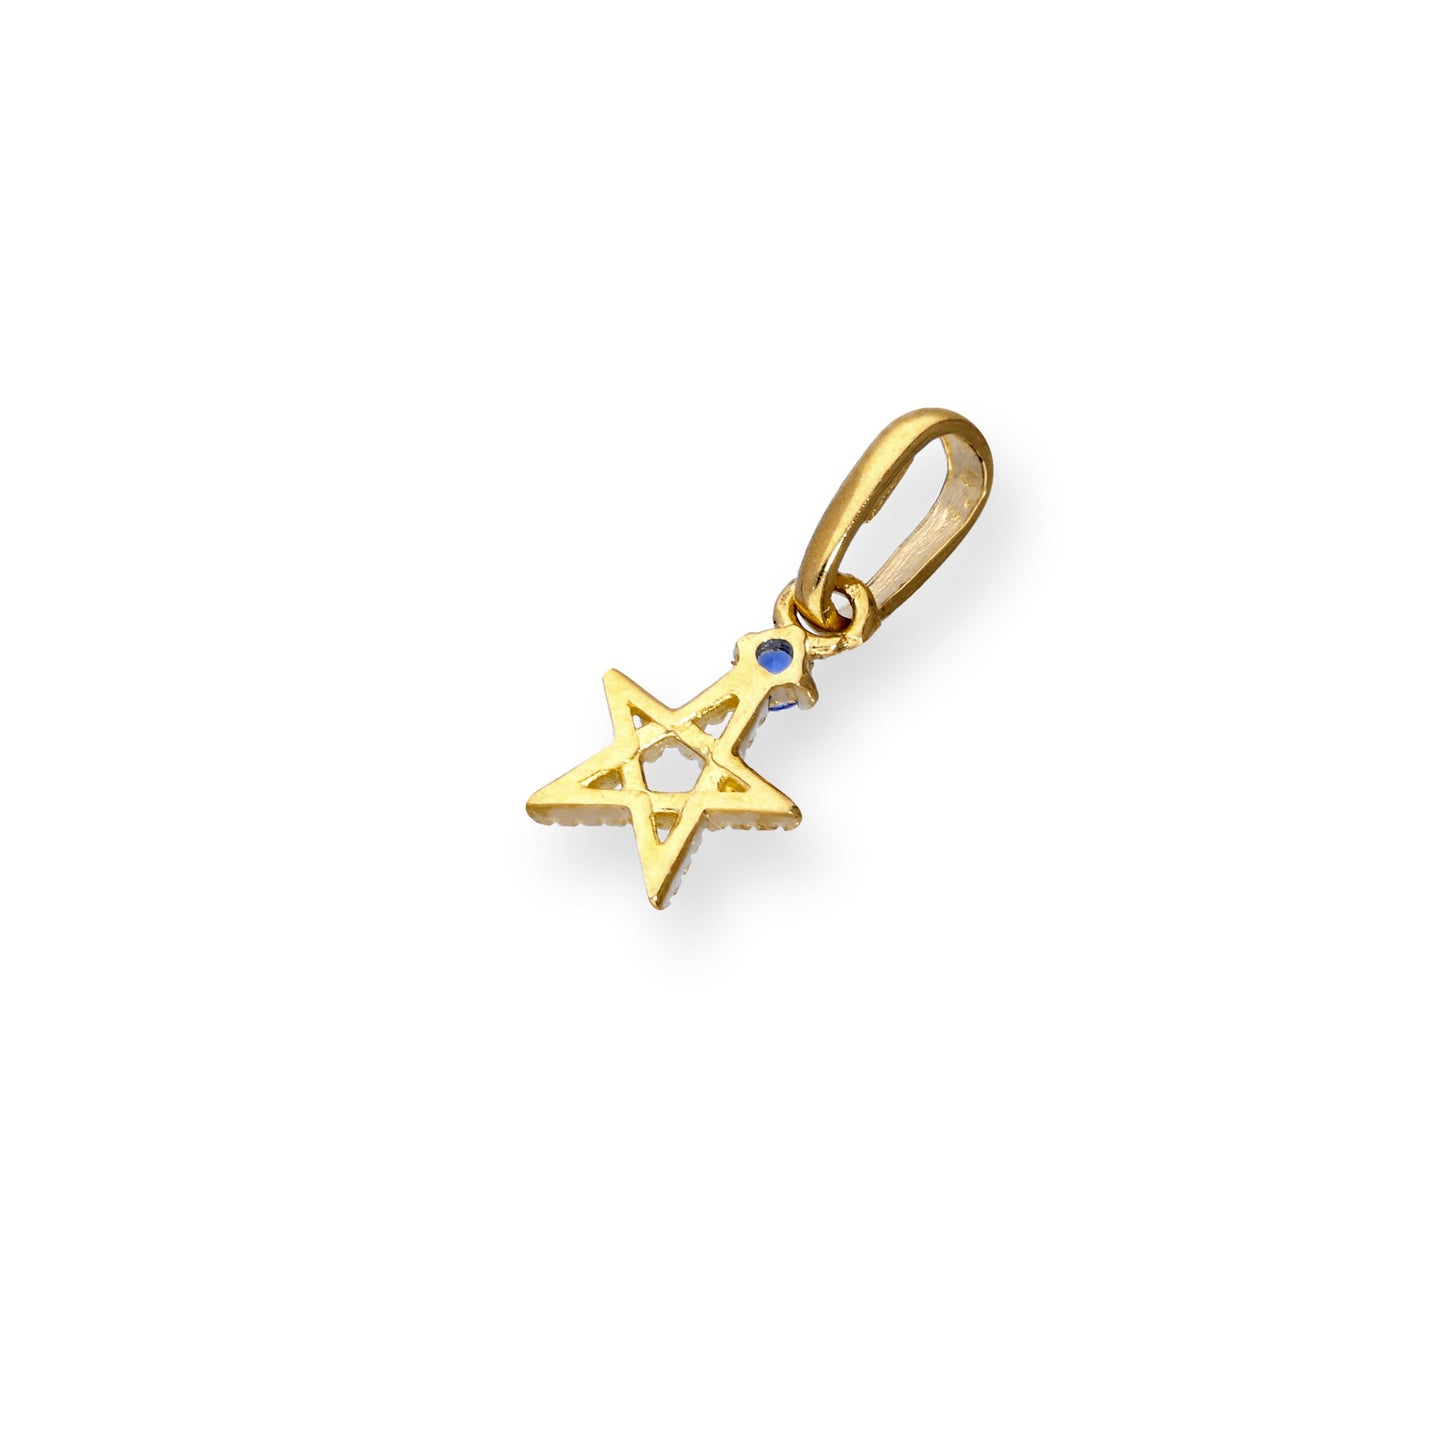 9ct Gold & Sapphire CZ Crystal Pentagram Star Charm